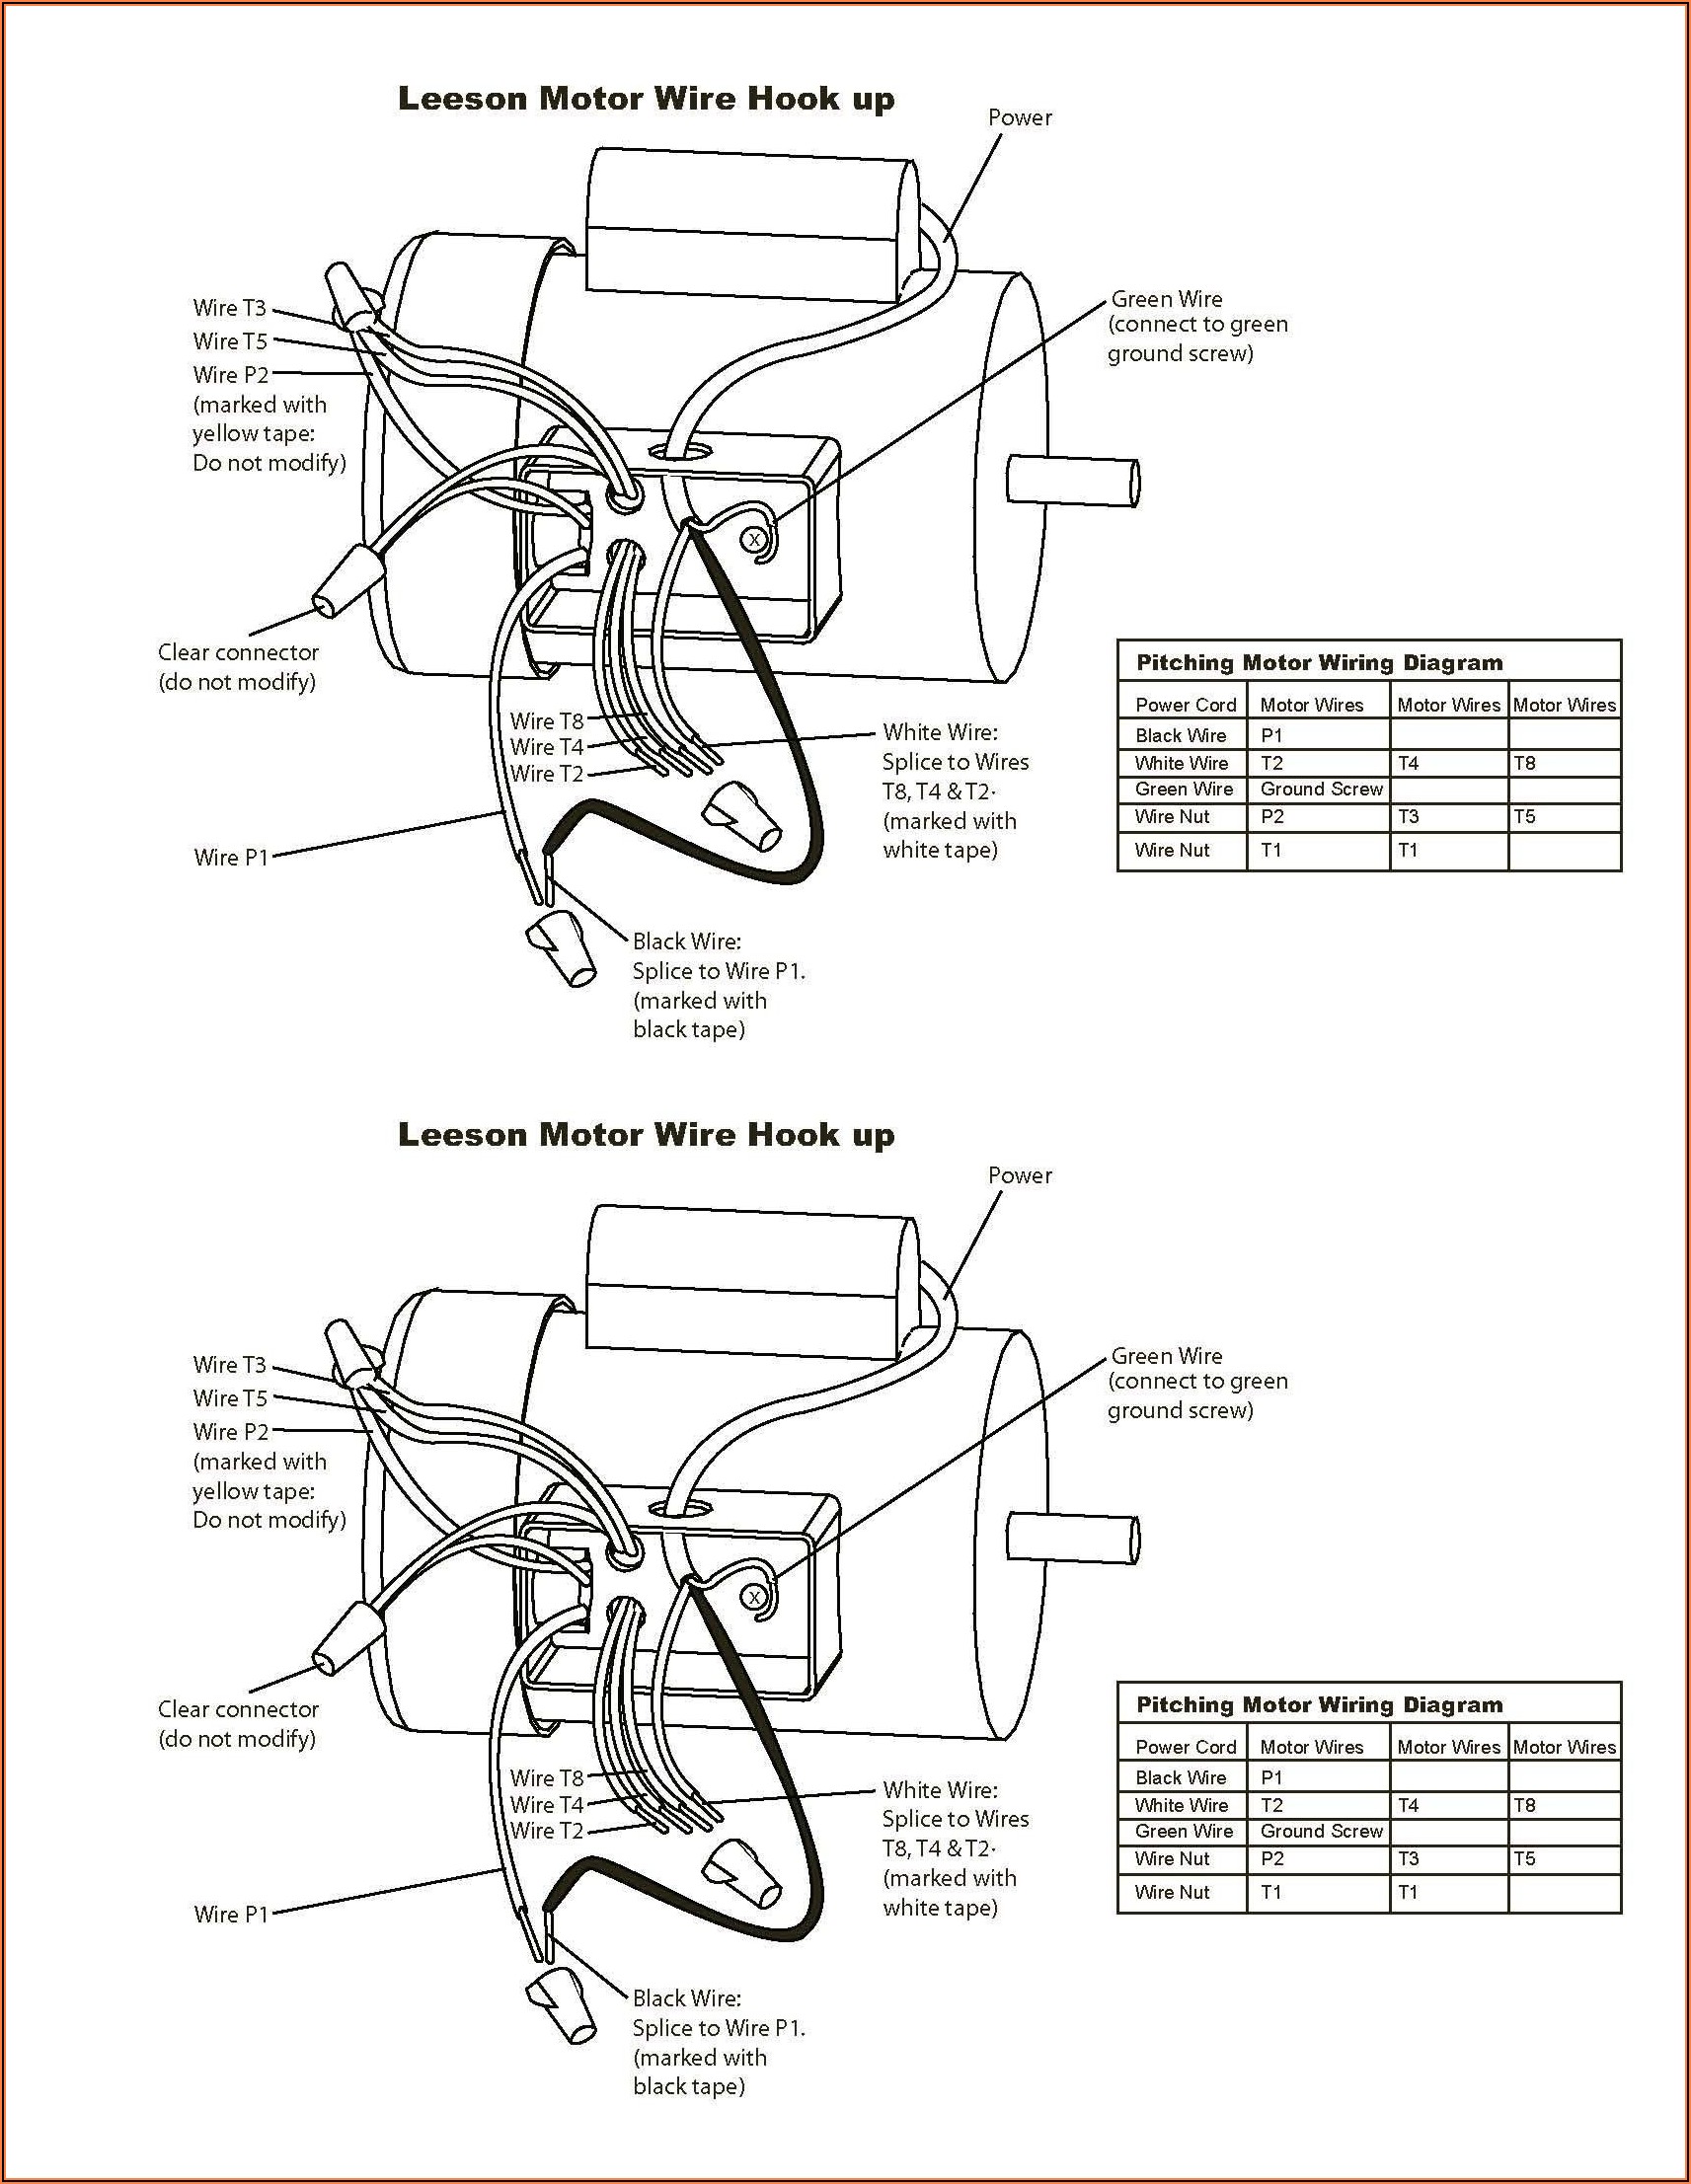 Baldor Motor Wiring Diagrams 3 Phase 480v